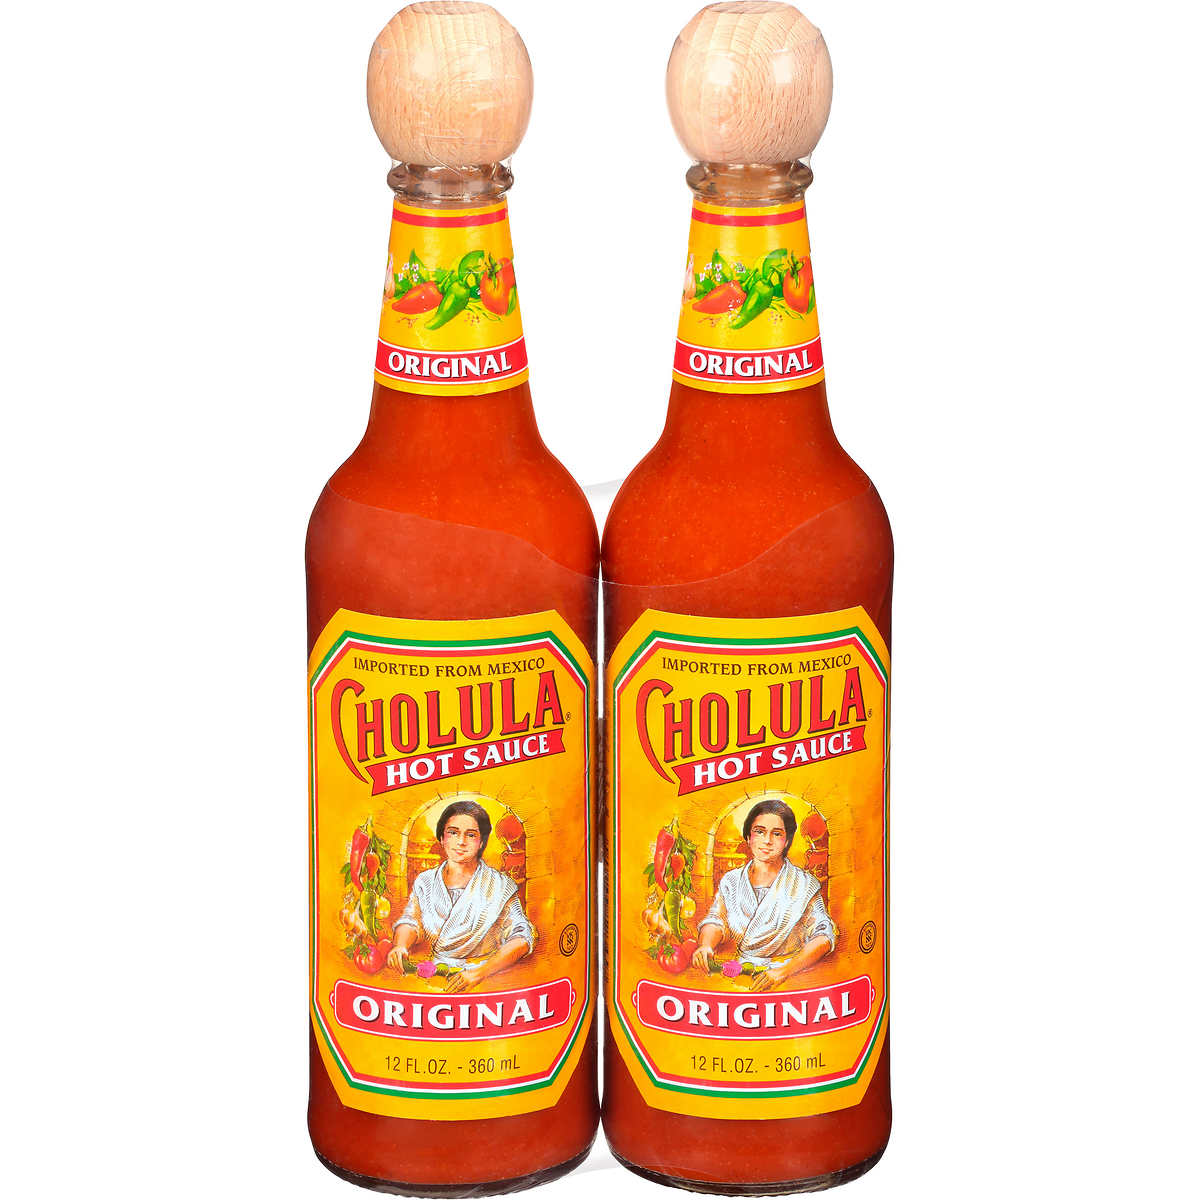 Best Cholula Hot Sauce Original, 12 fl oz., 2-count